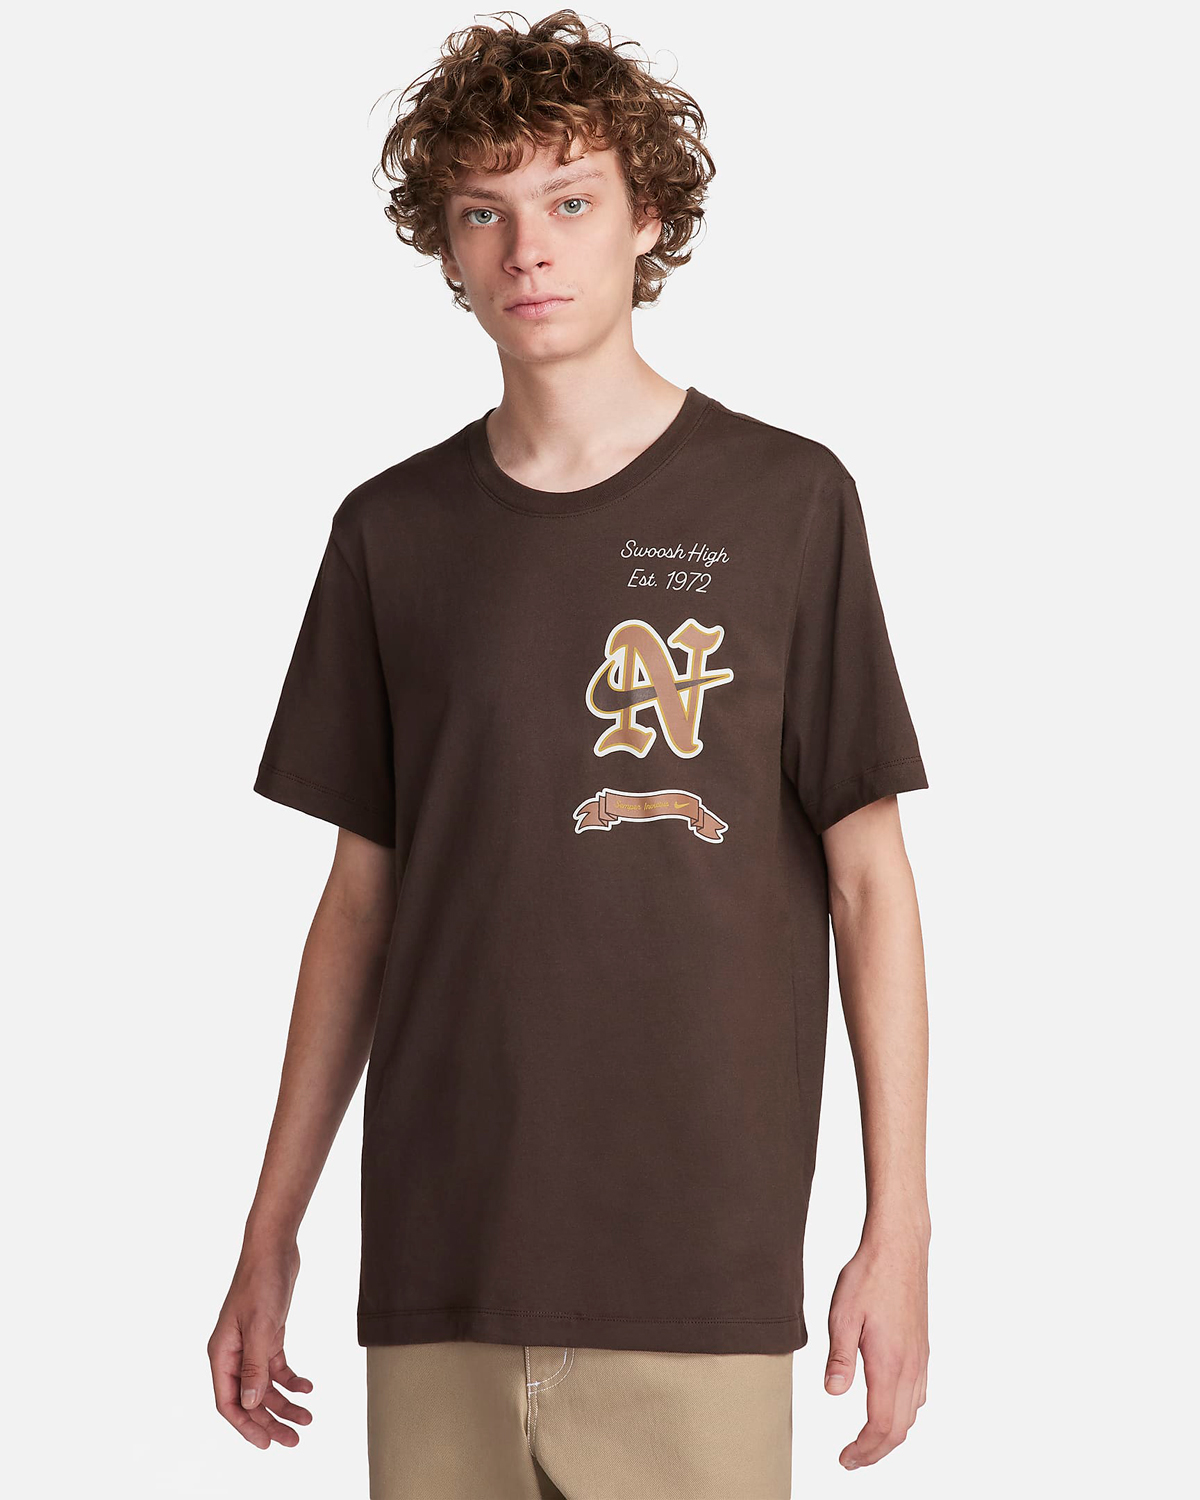 Nike Sportswear T Shirt Baroque Brown Archaeo Brown 1